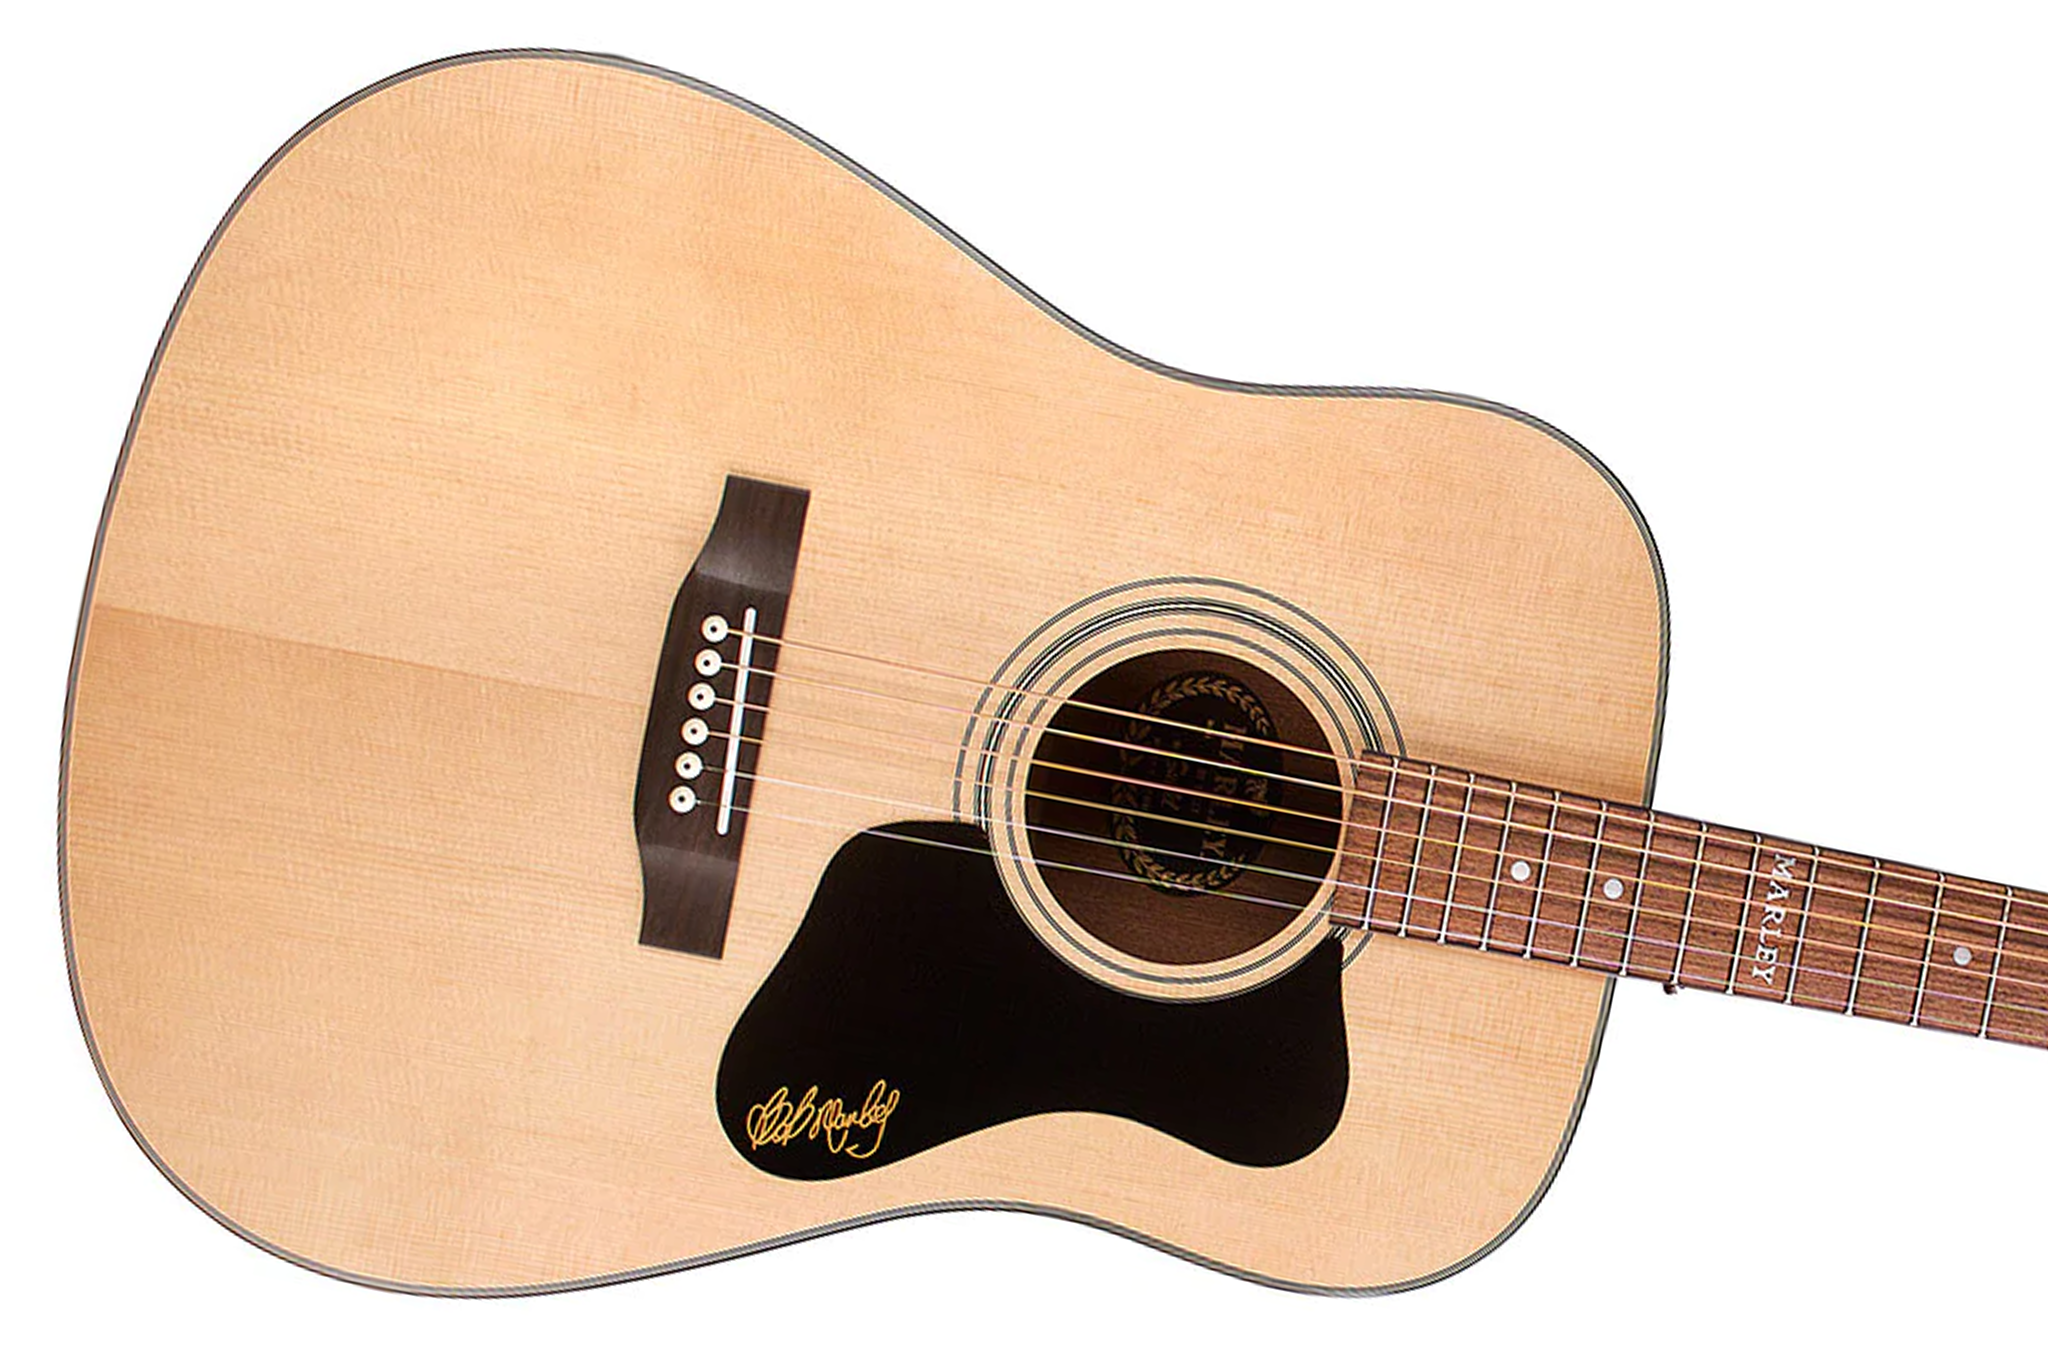 Guild Bob Marley A-20 Acoustic Steel String Guitar "Redemption"